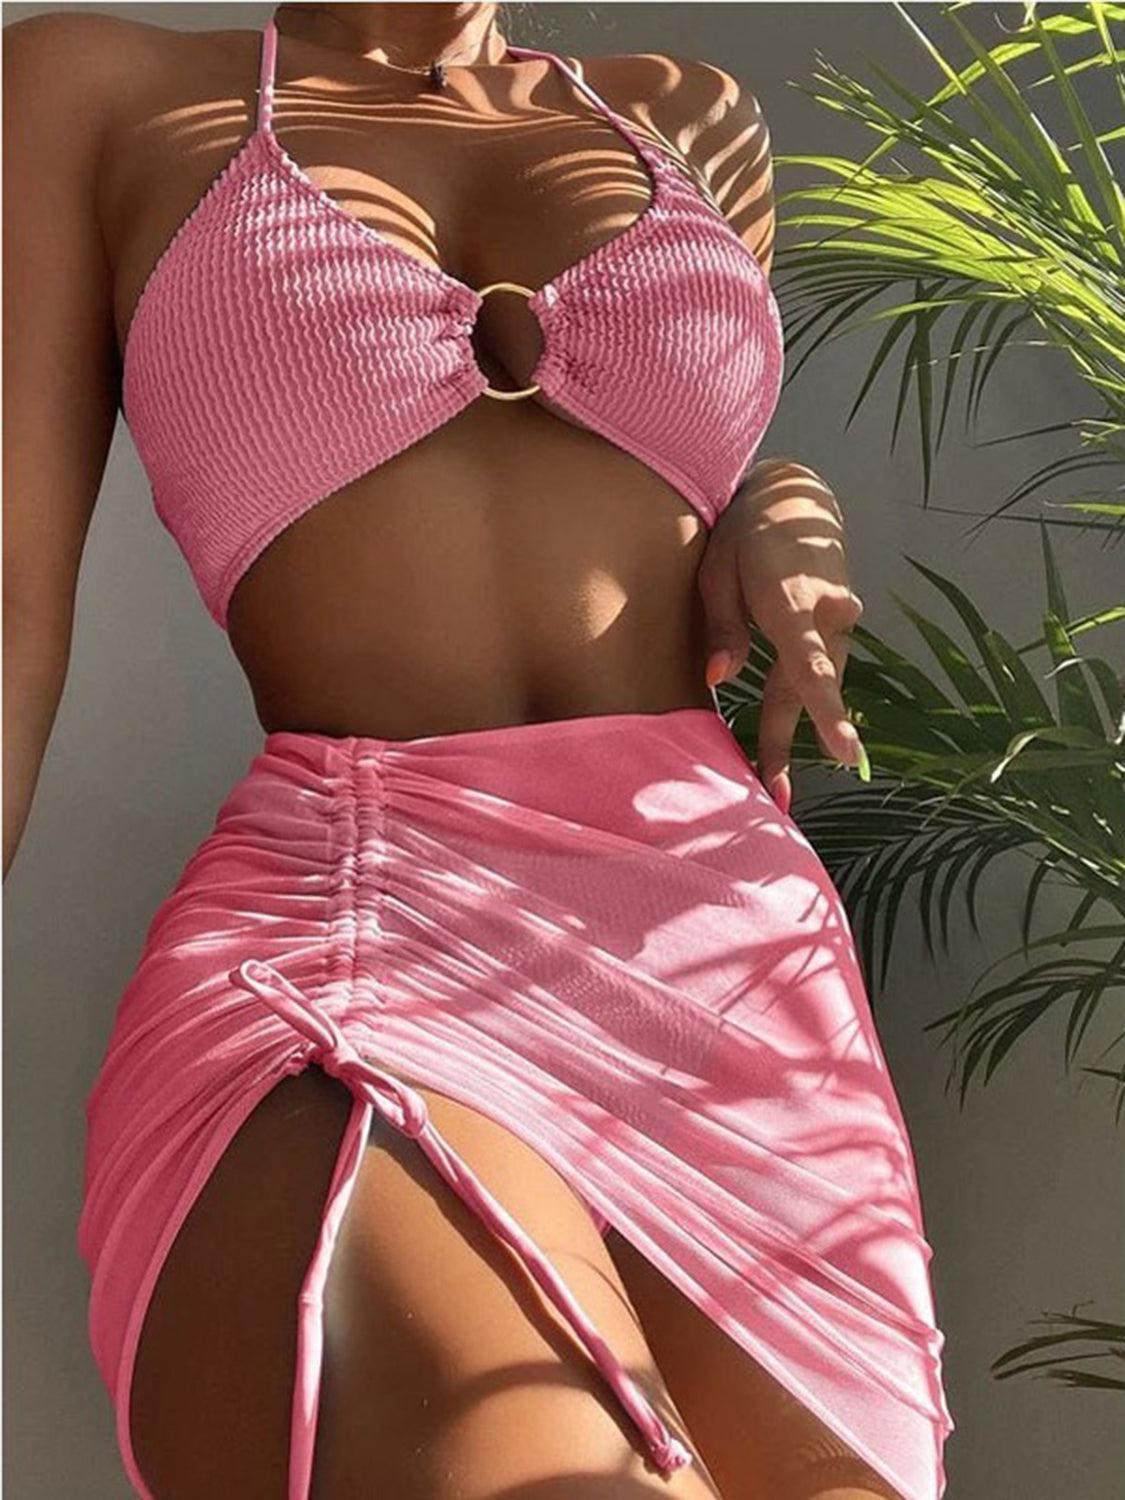 a woman in a pink bikini top and skirt